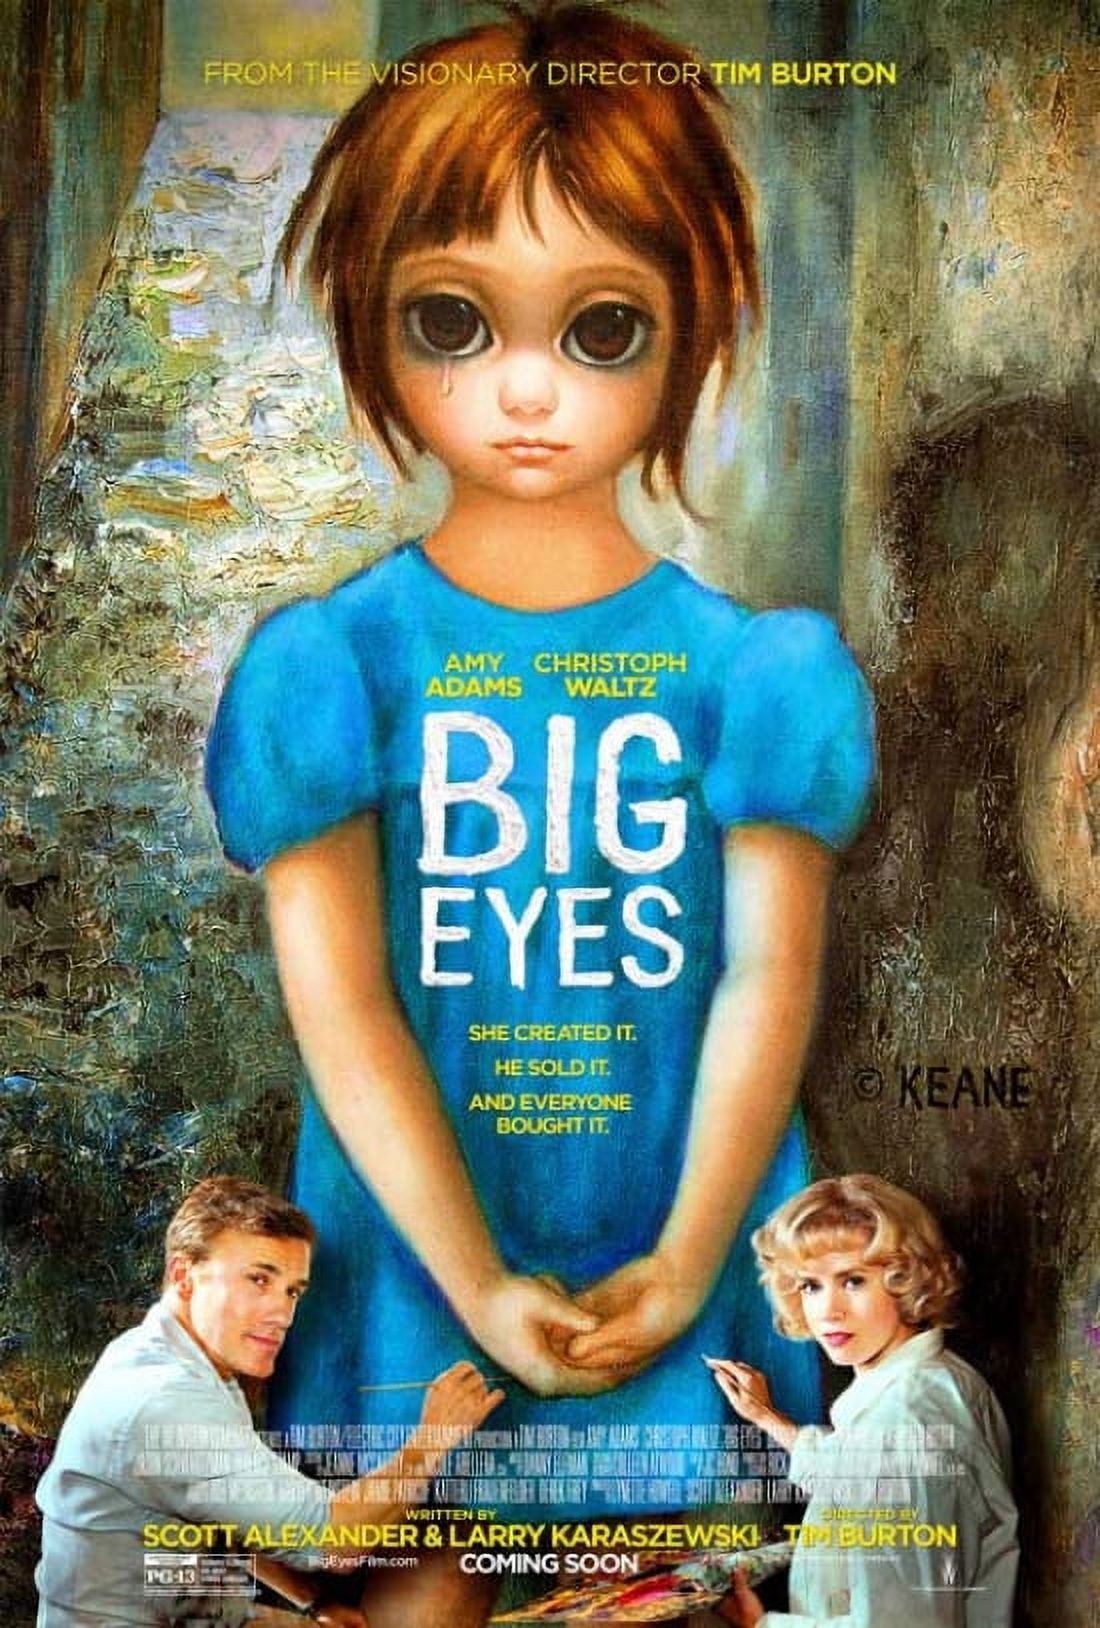 Big Eyes Movie Poster (11 x 17) - image 1 of 1